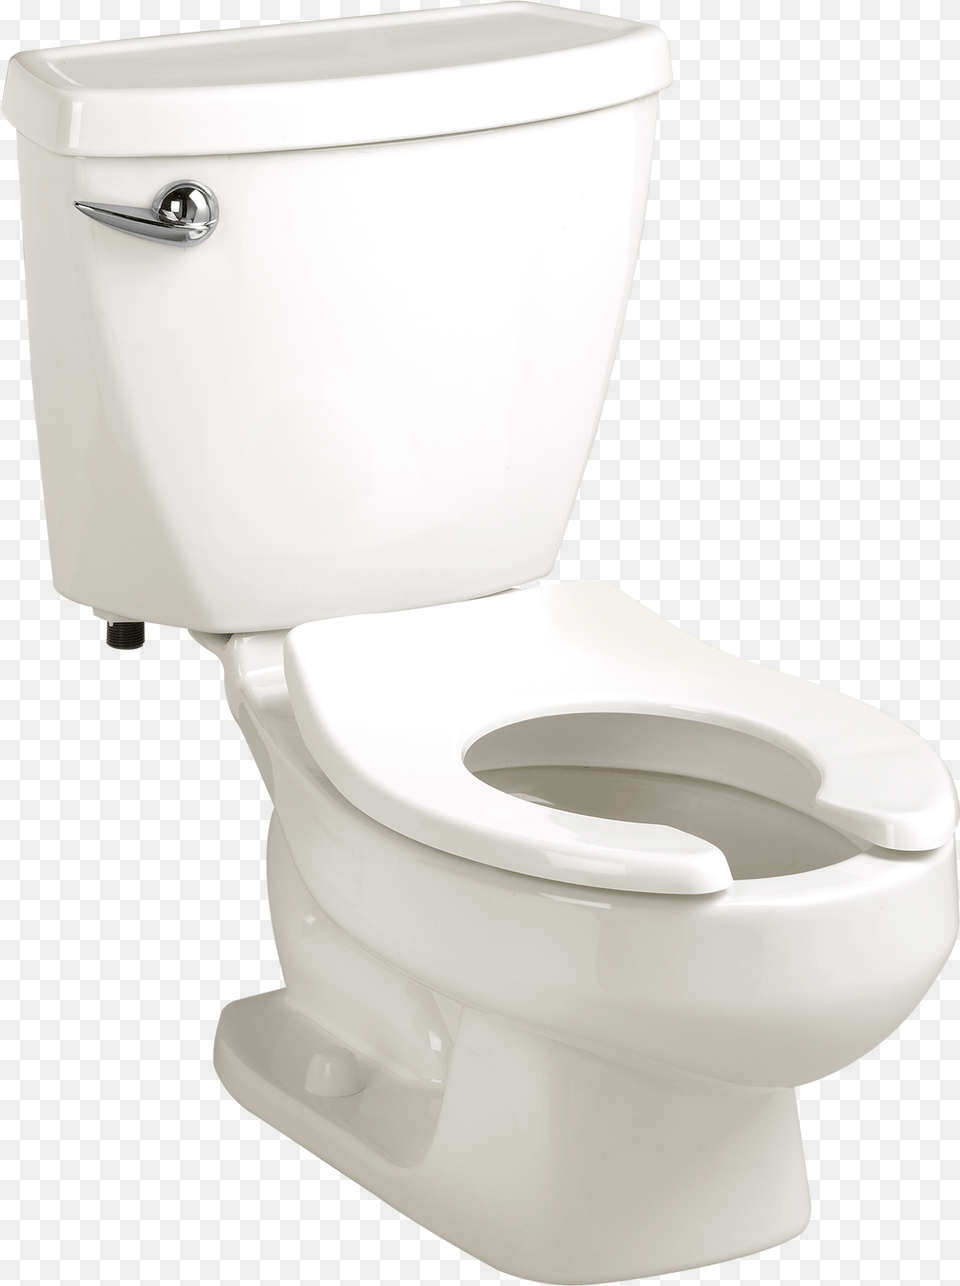 Toilet Top View American Standard Baby Devoro Toilet, Indoors, Bathroom, Room, Potty Free Png Download